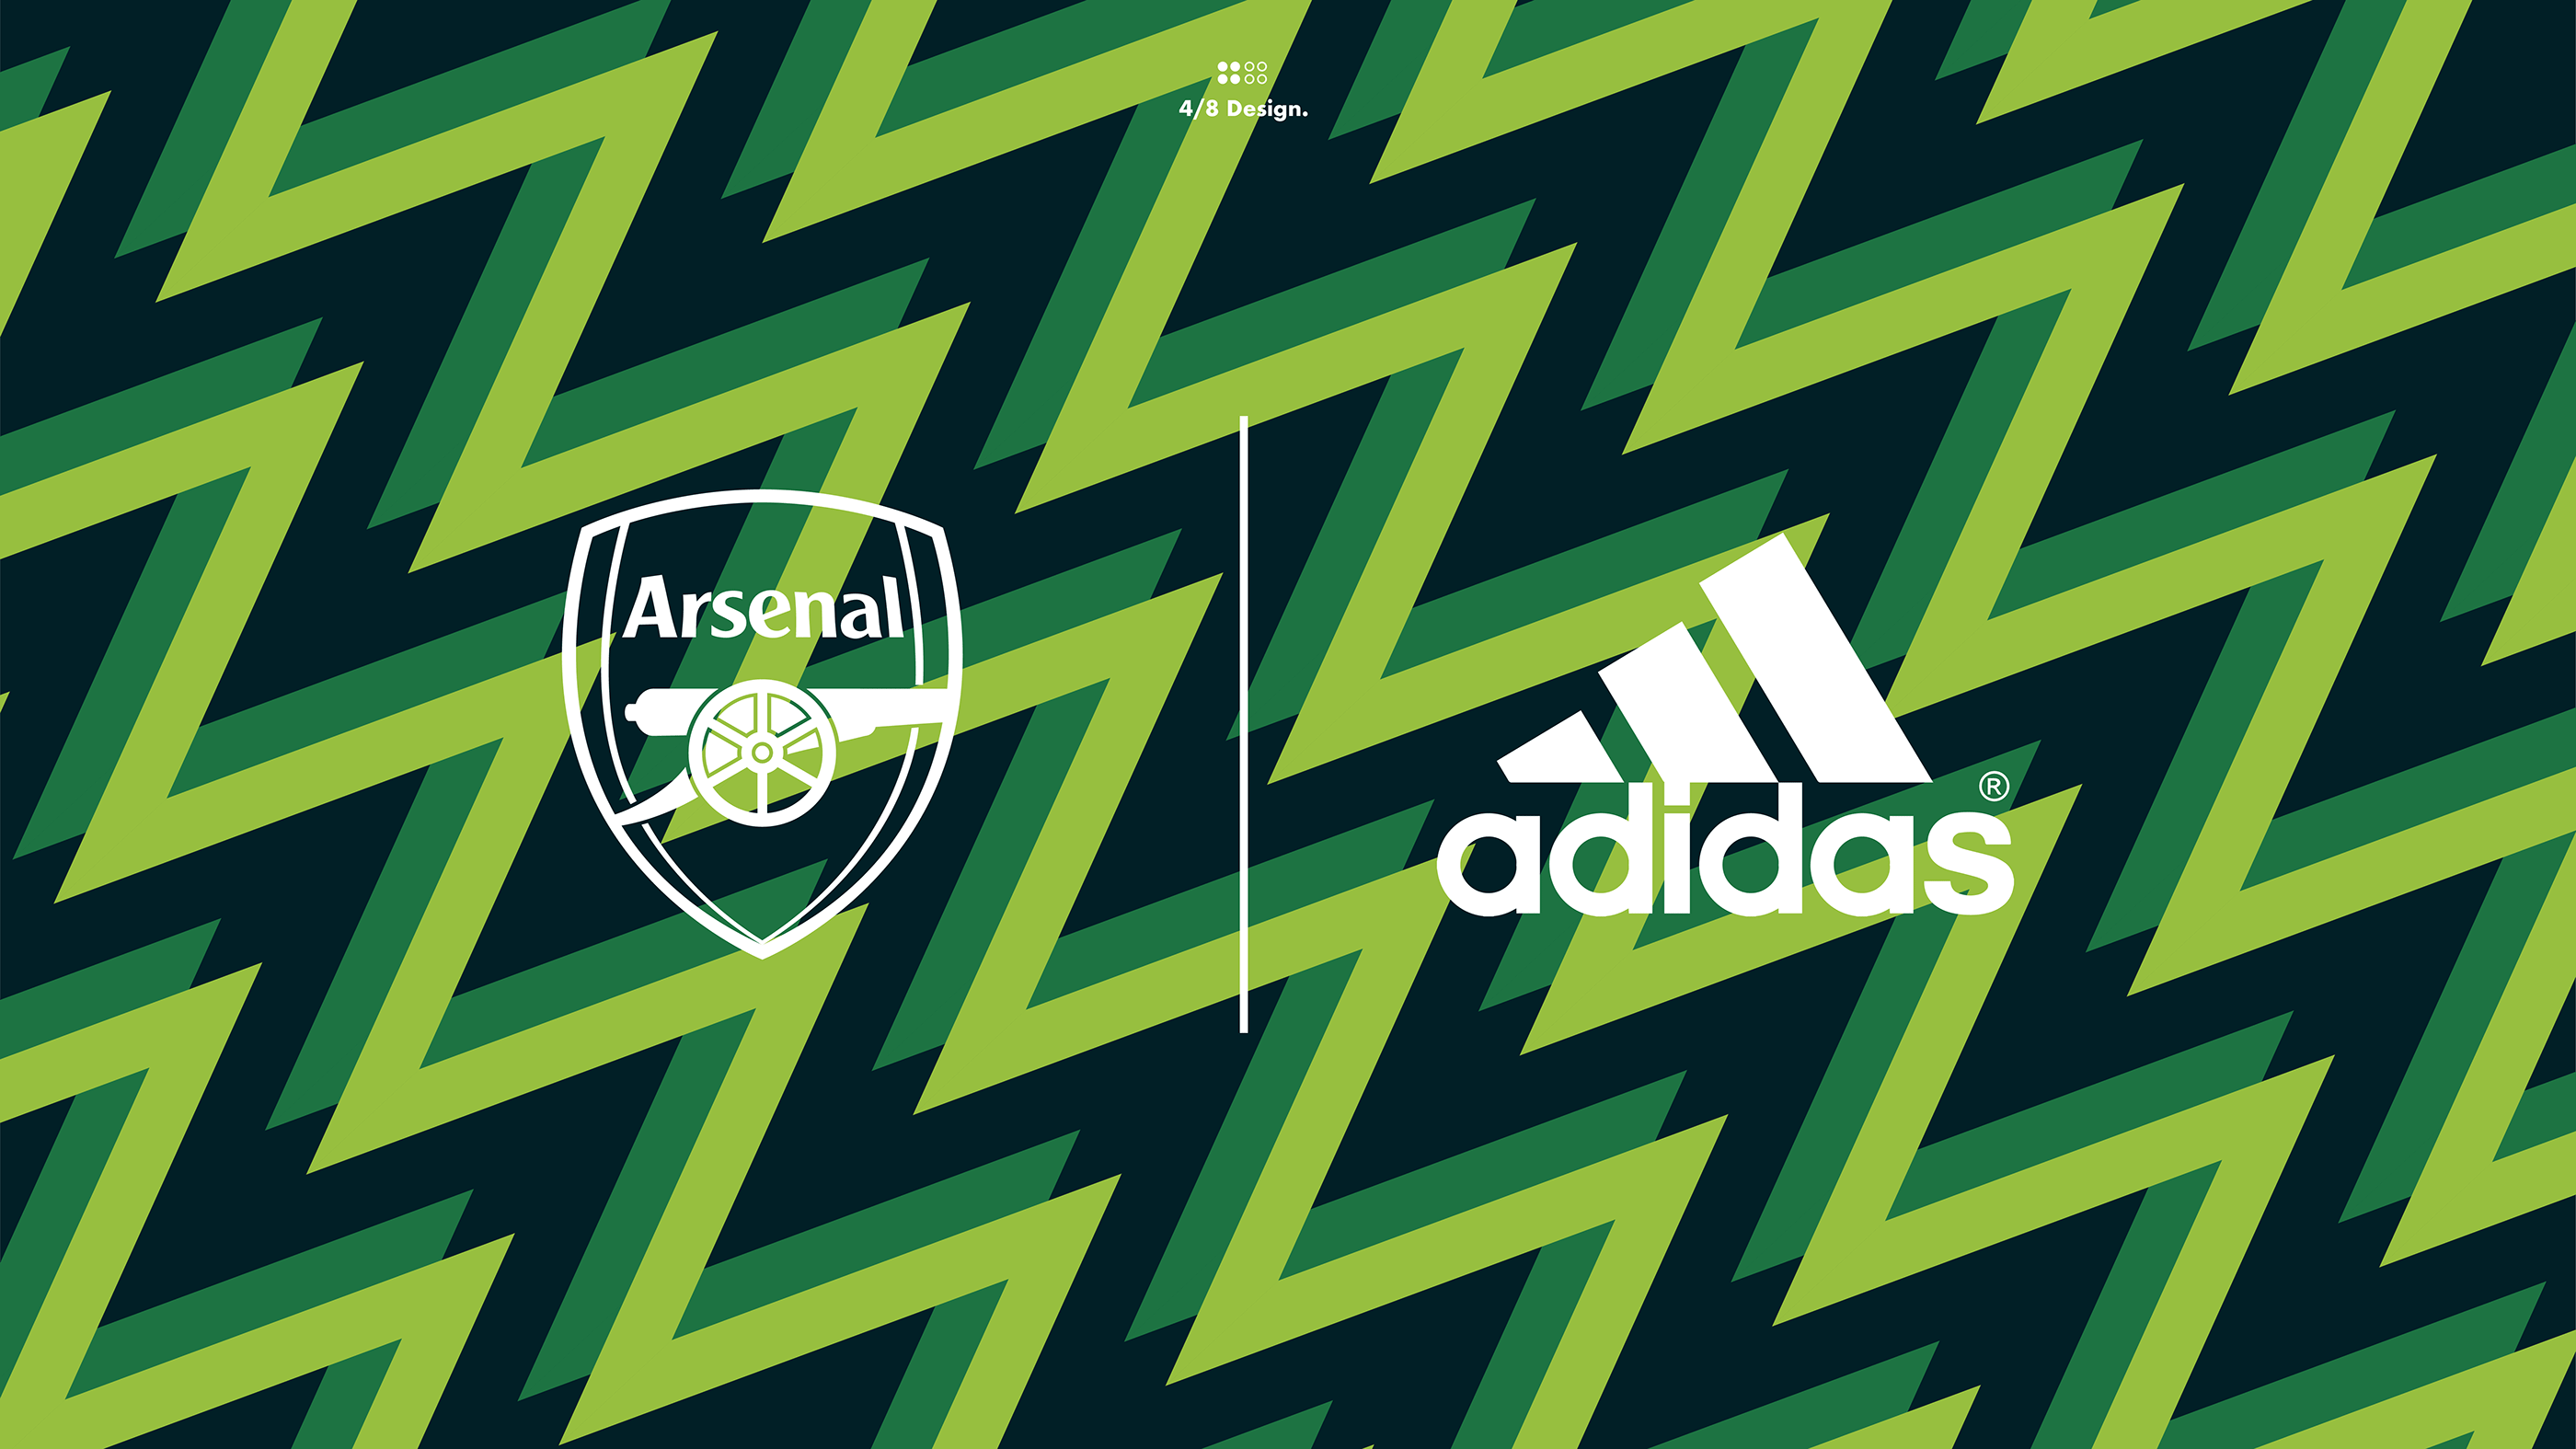 Adidas X Arsenal Wallpaper On Behance